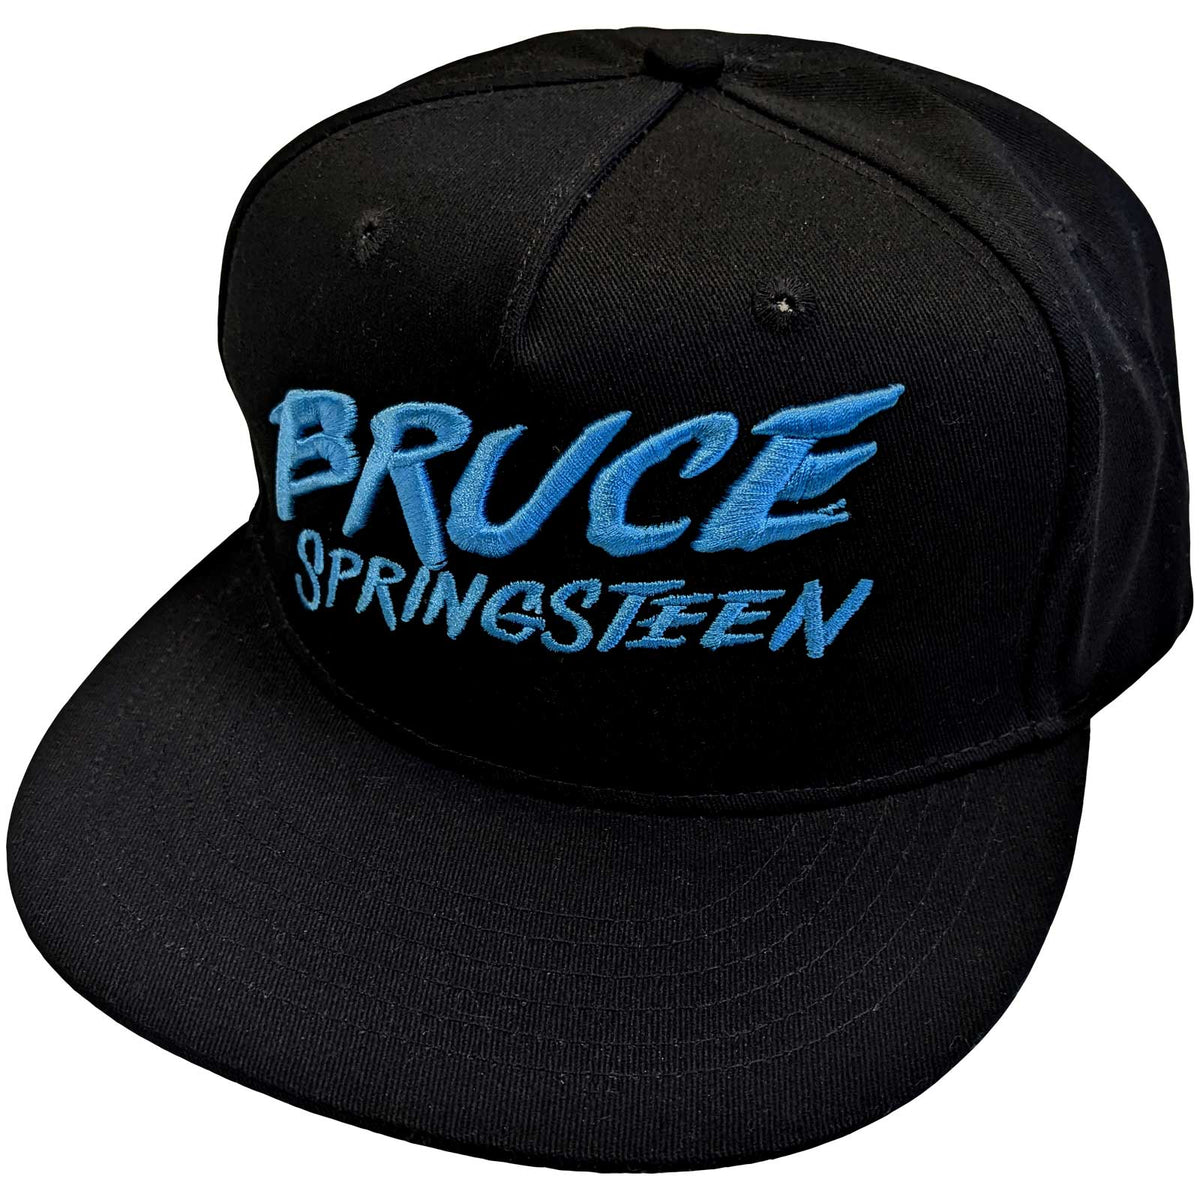 Casquette Snapback unisexe Bruce Springsteen - Logo The River - Produit sous licence officielle